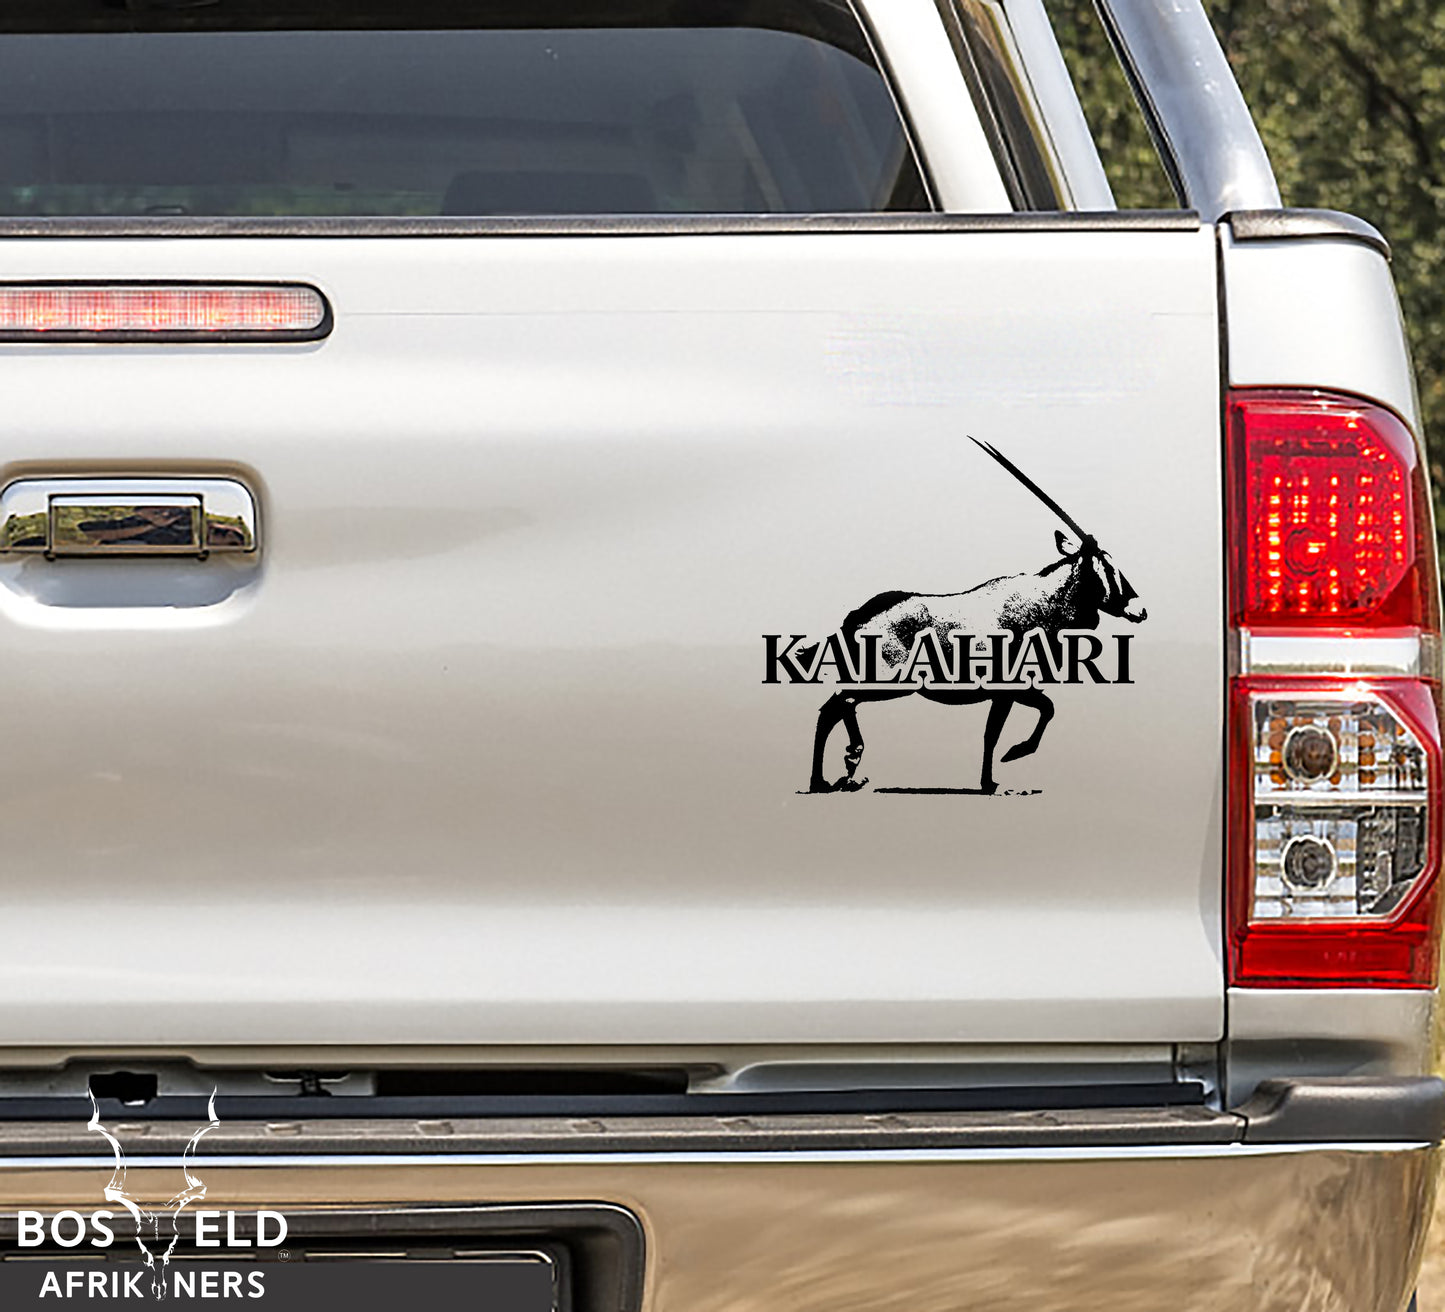 Kalahari Gemsbok Oryx Toyota Hilux Ford Ranger Bakkie Trailer African Wildlife Safari Vinyl Decal Sticker